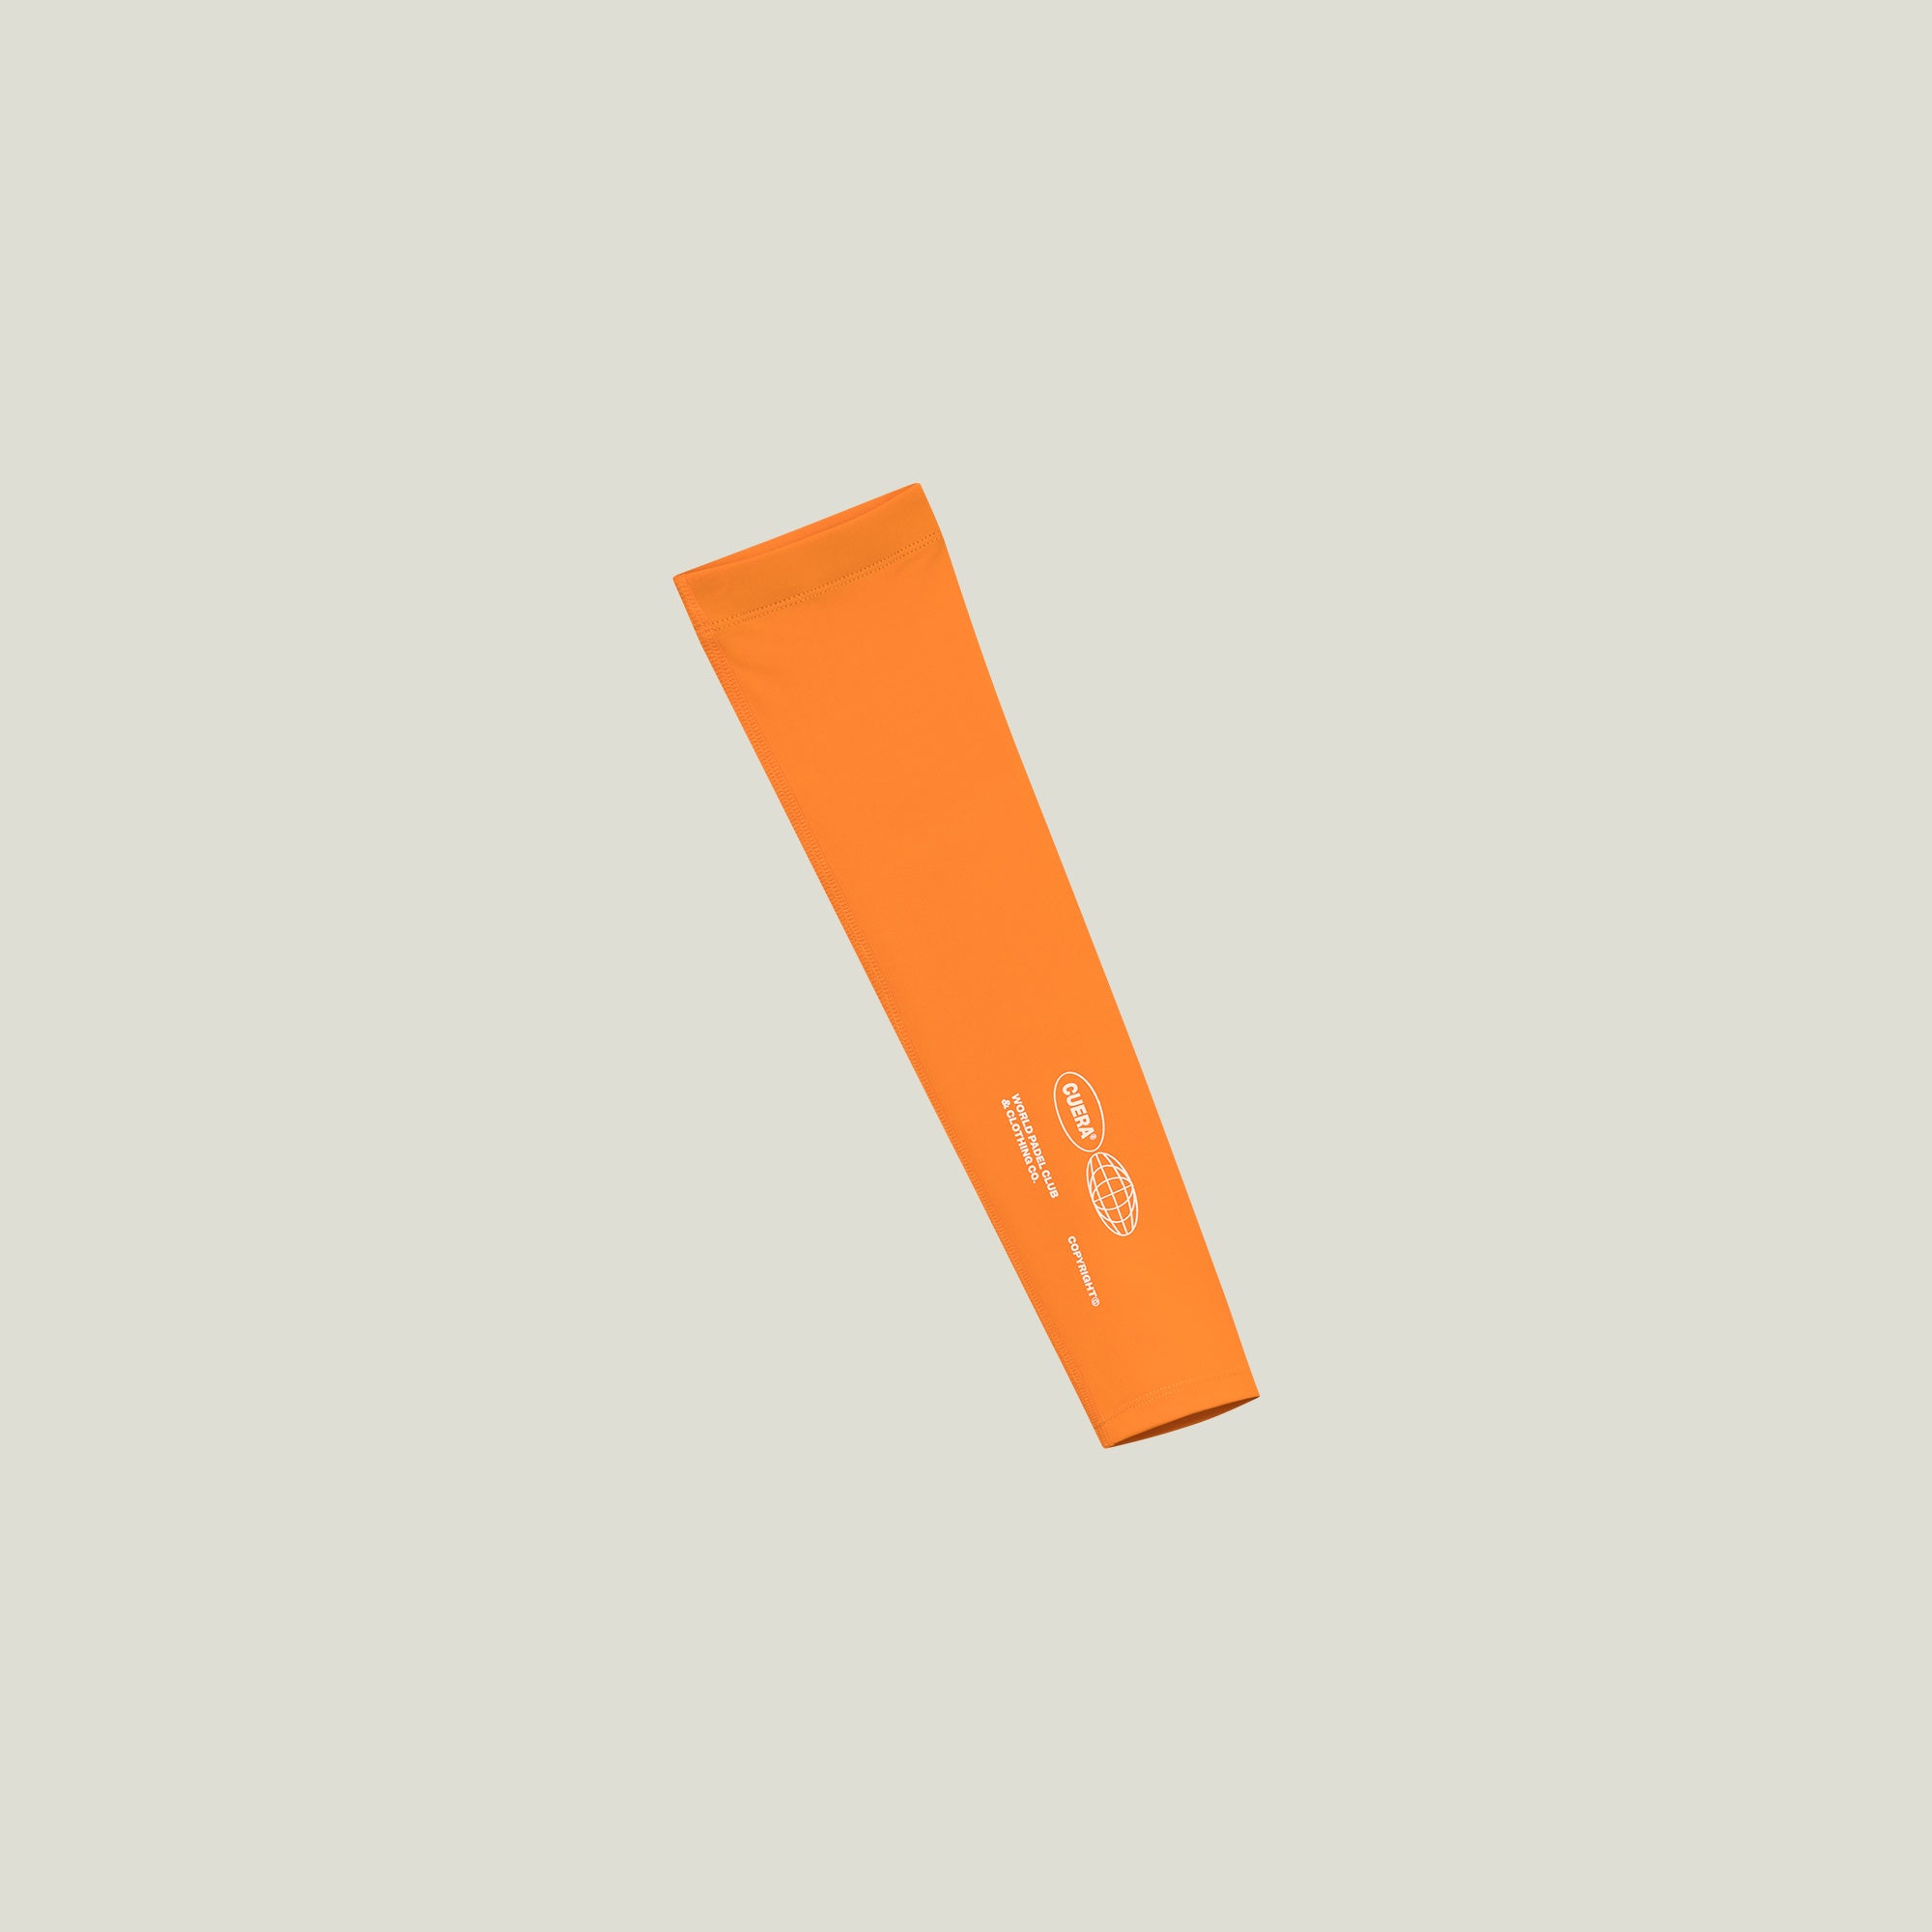 Cuera Oncourt Arm Sleeve (Orange)